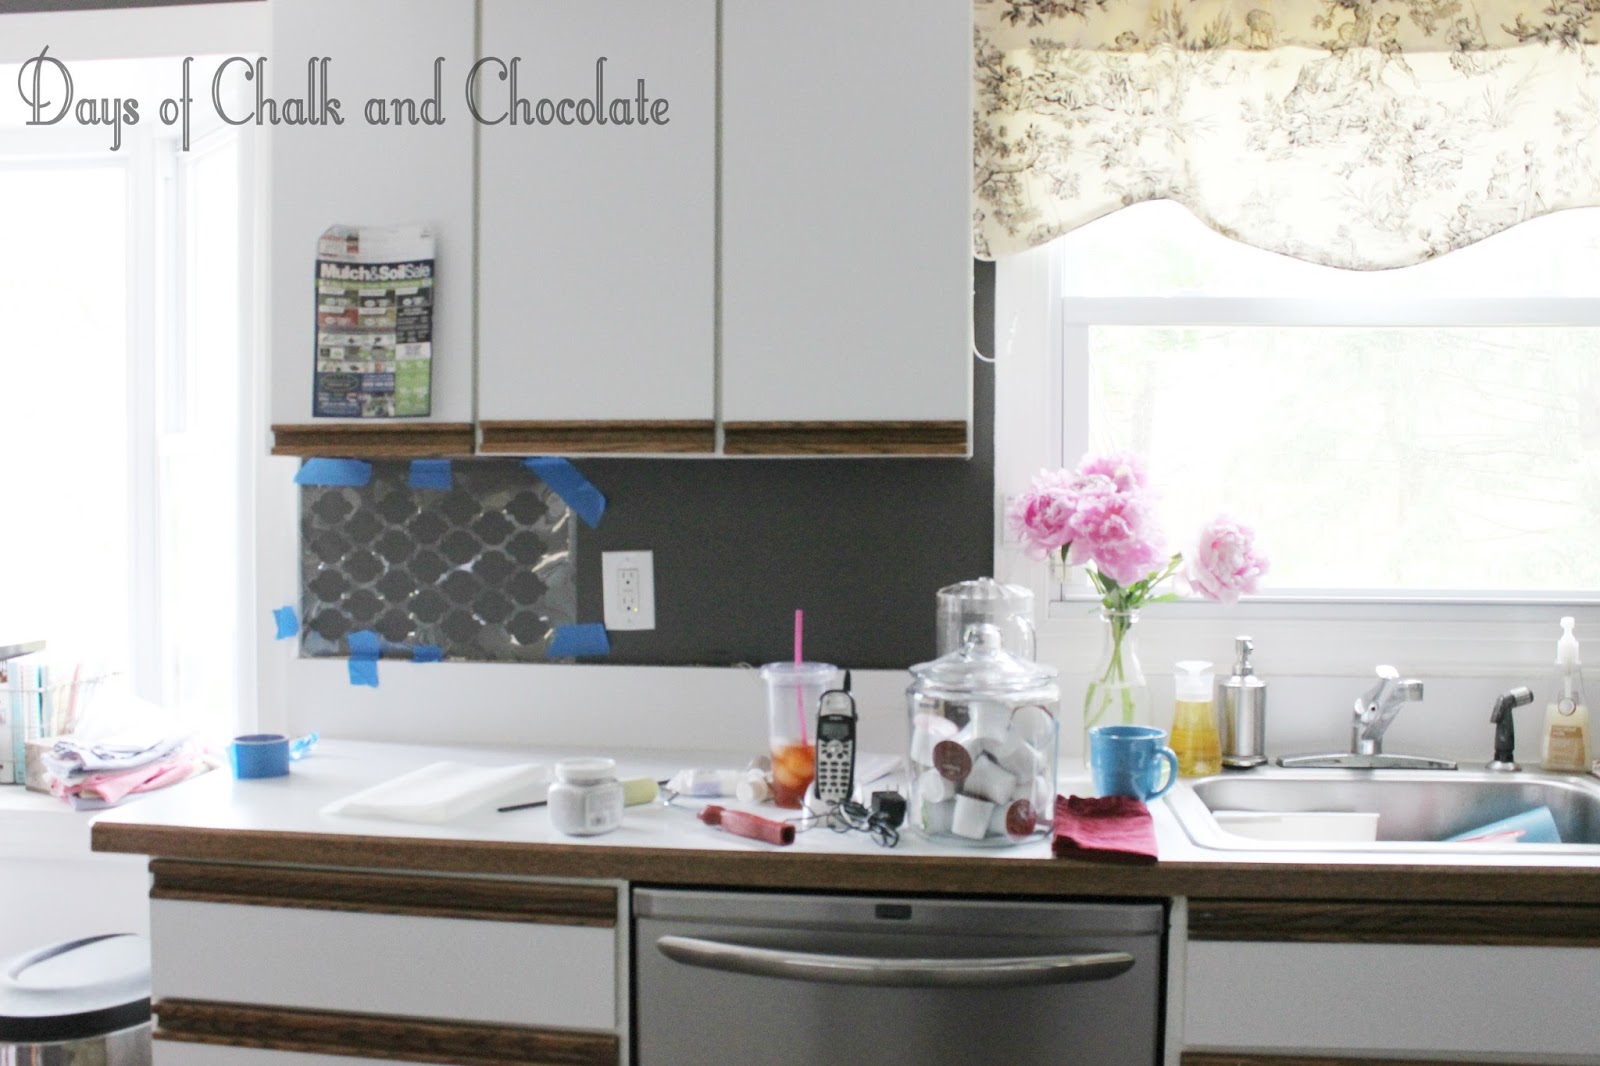 ... of Chalk and Chocolate: Easy DIY Self-Adhesive Faux Tile Backsplash